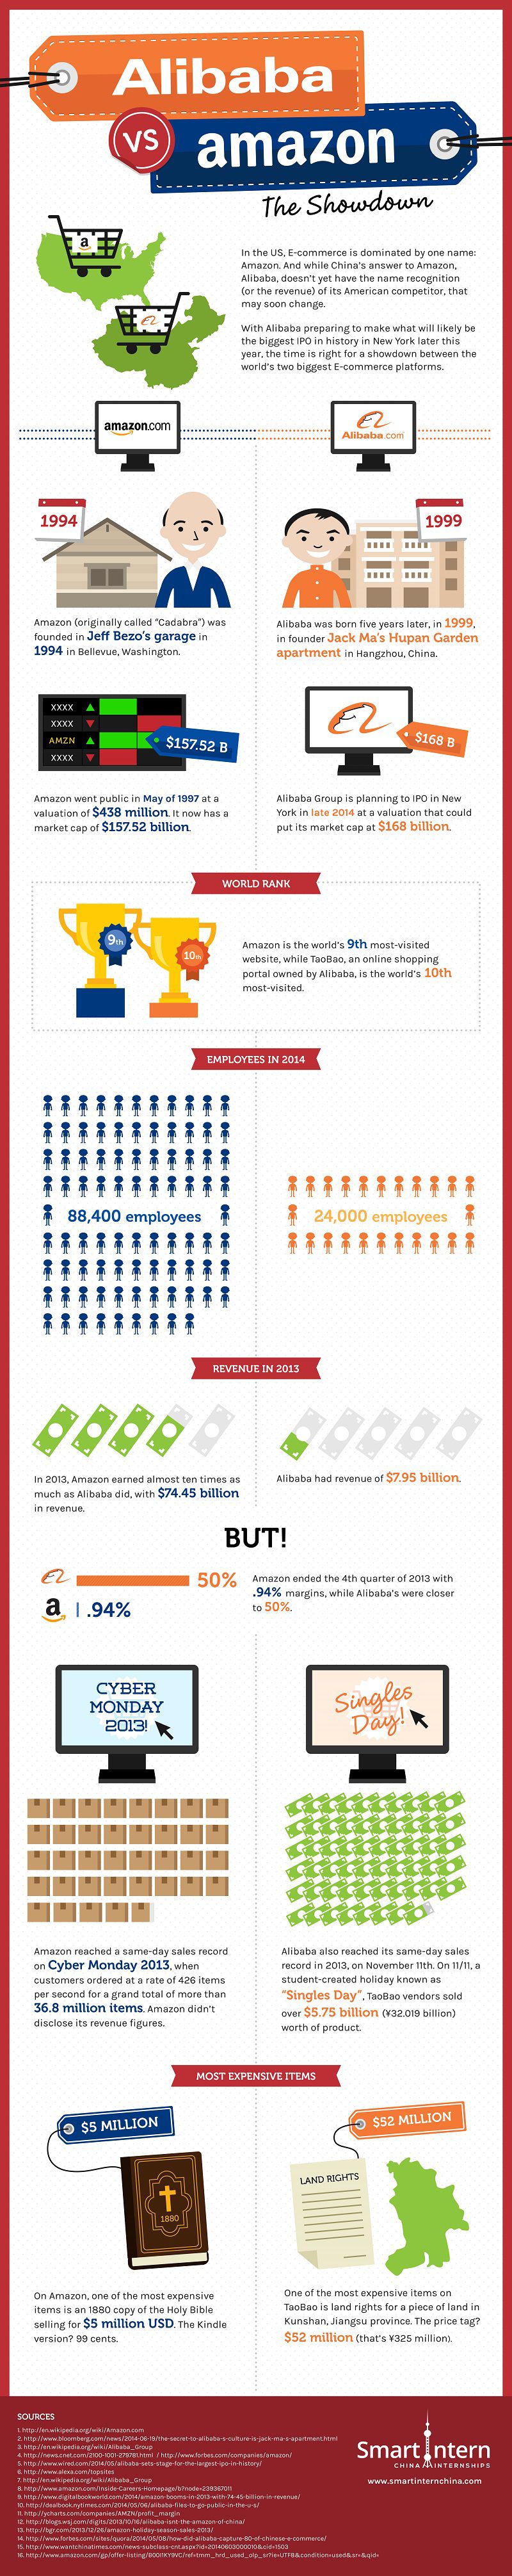 alibaba-vs-amazon-infographic